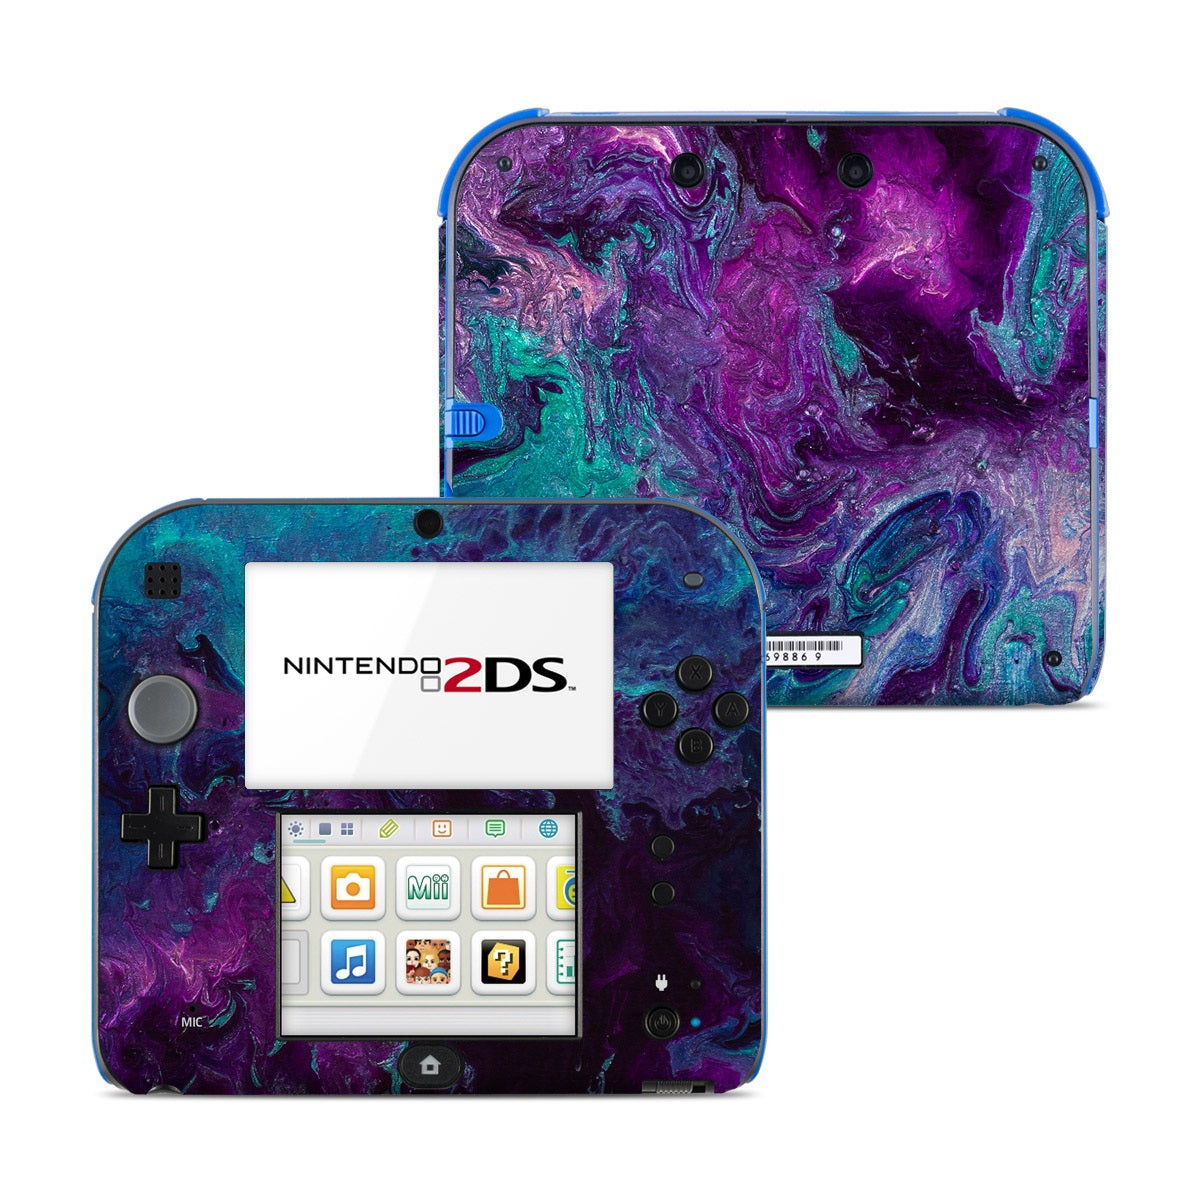 Nebulosity - Nintendo 2DS Skin